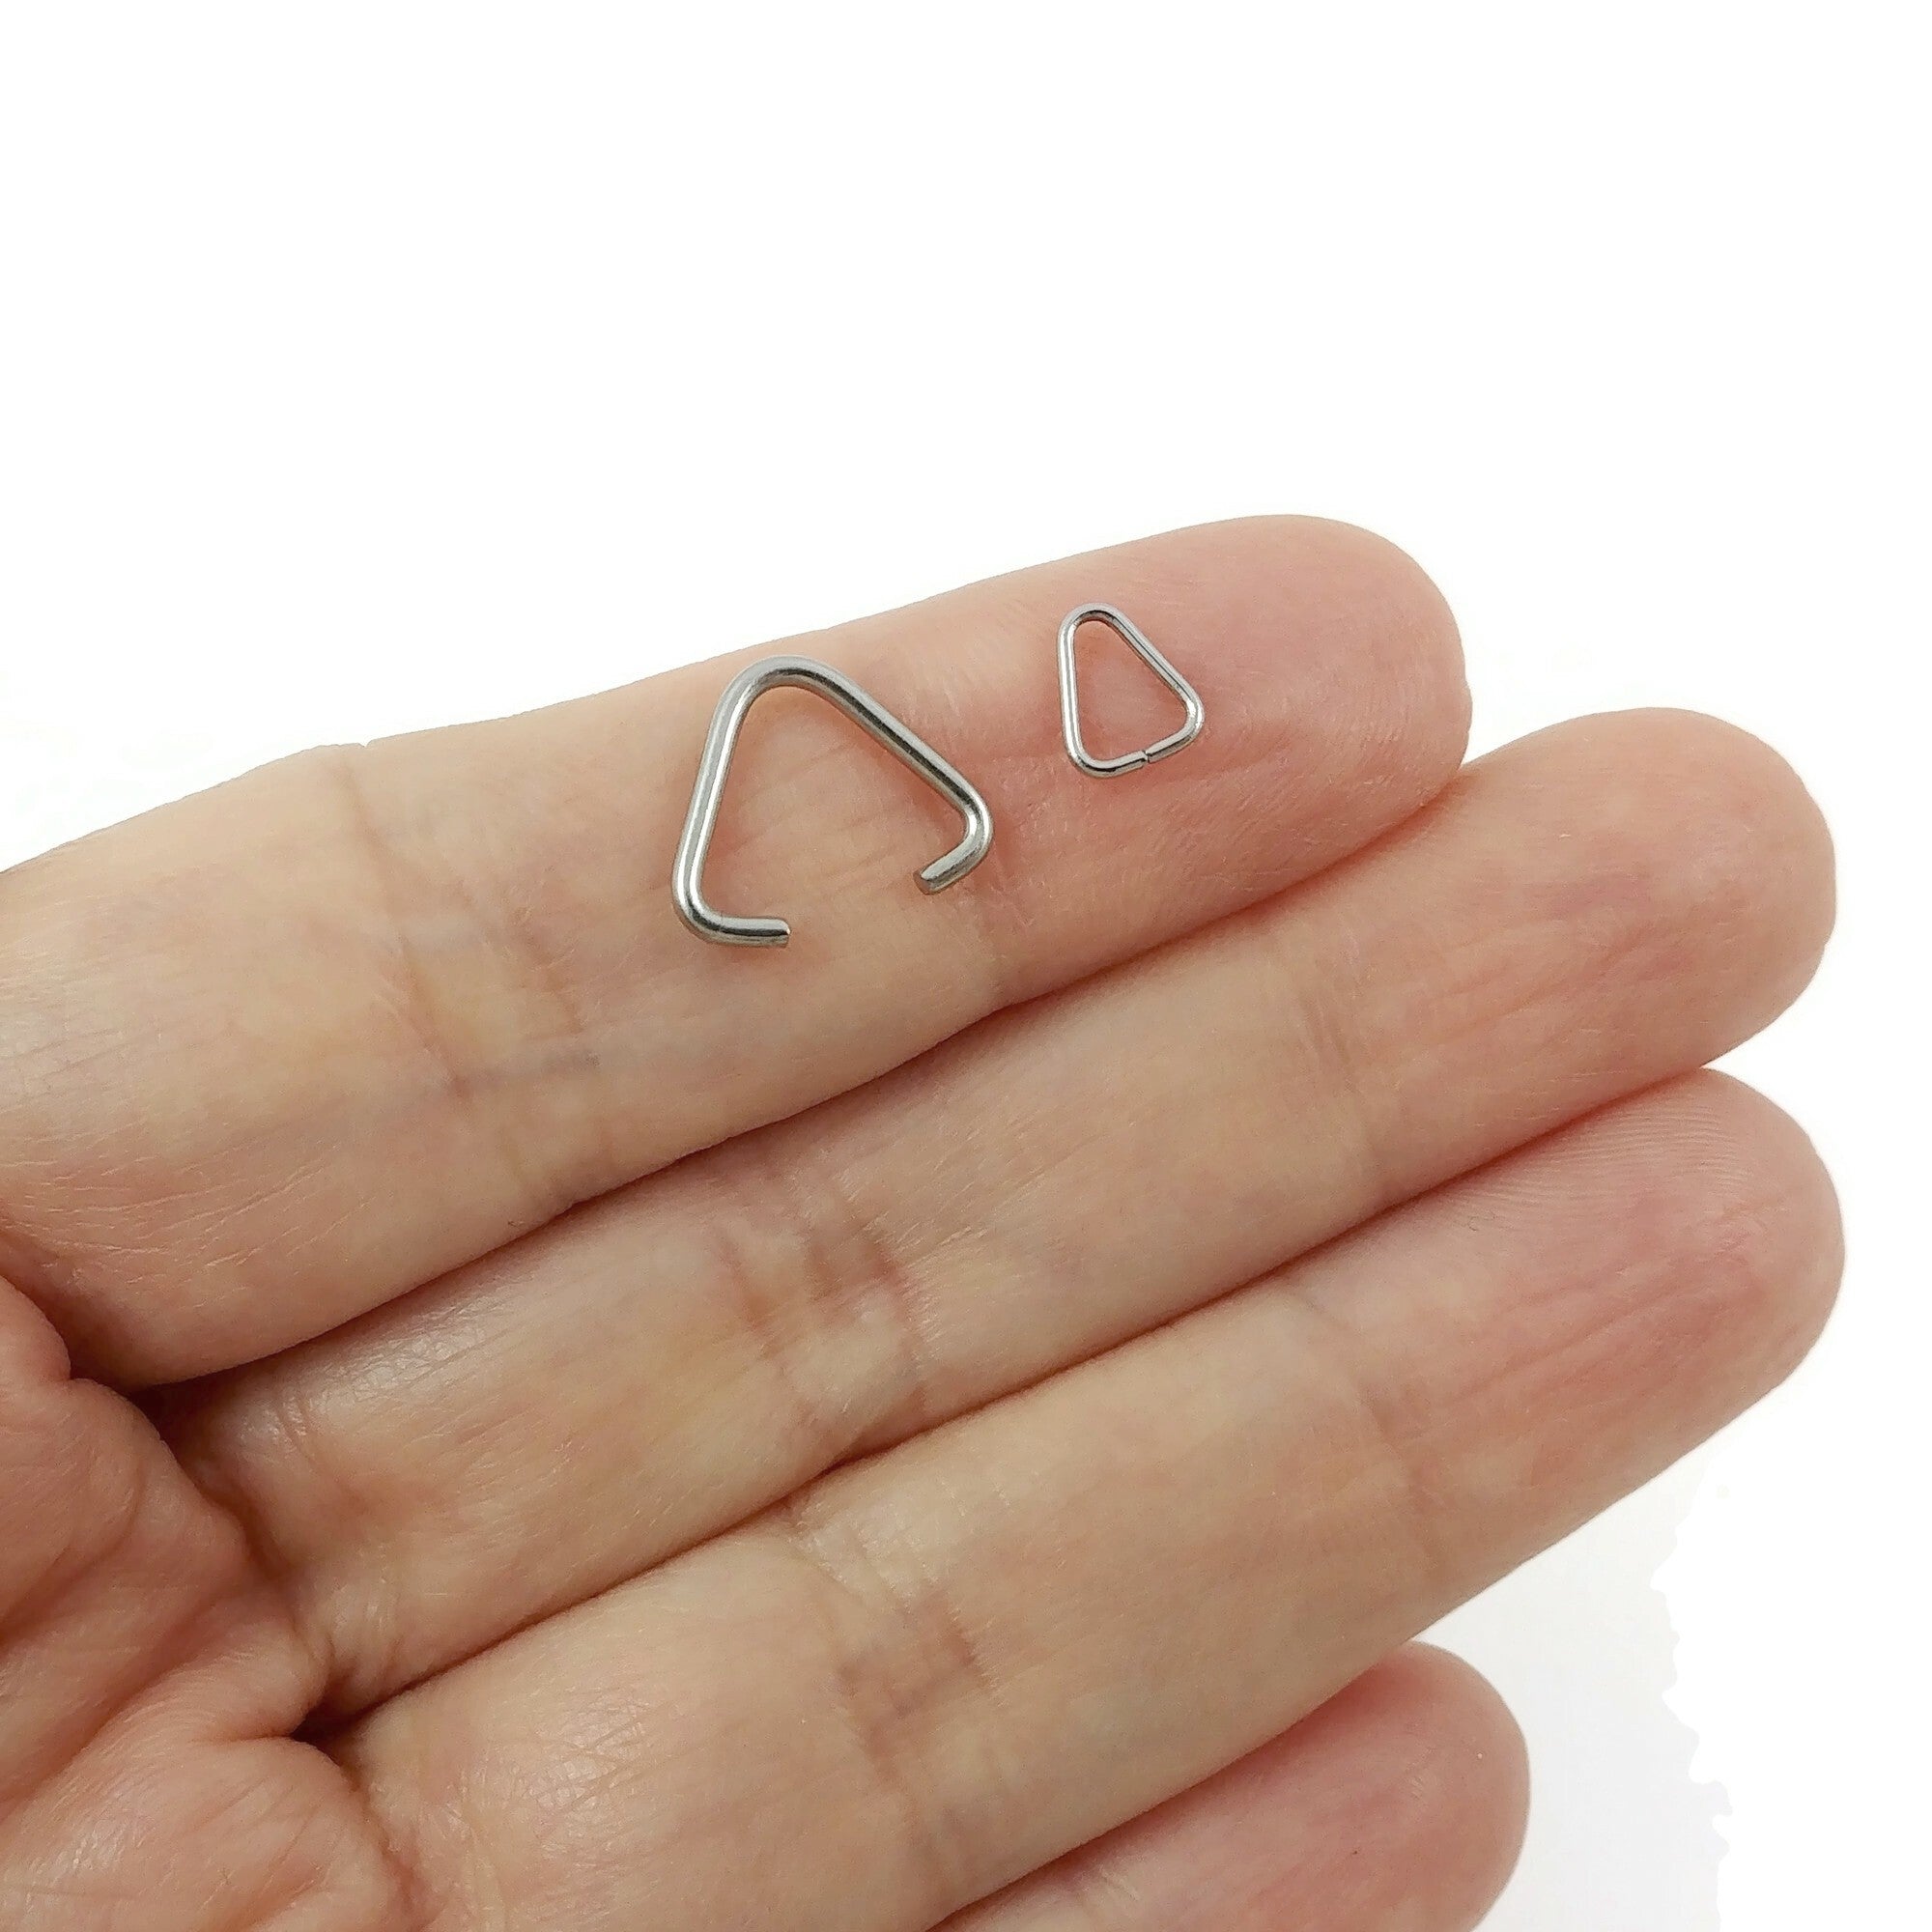 200pcs Eye Pins Jewelry Findings Eye Pins 30mm Iron Eye Pins for Jewelry Making 21 Gauge Bronze, Women's, Size: One size, Silver